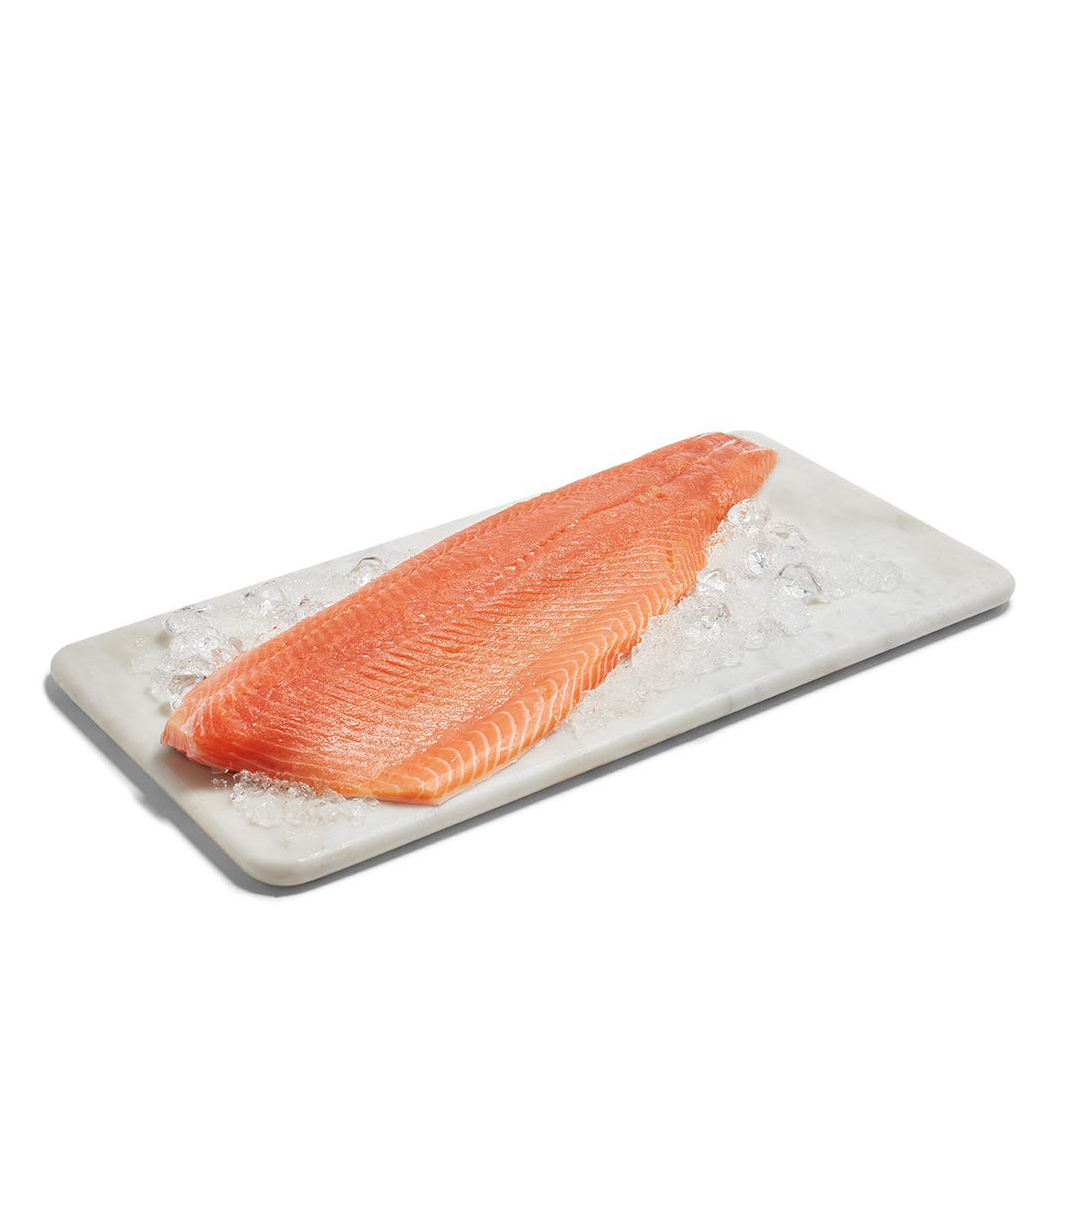 Whole Foods Market Farm Raised Atlantic Salmon Fillet